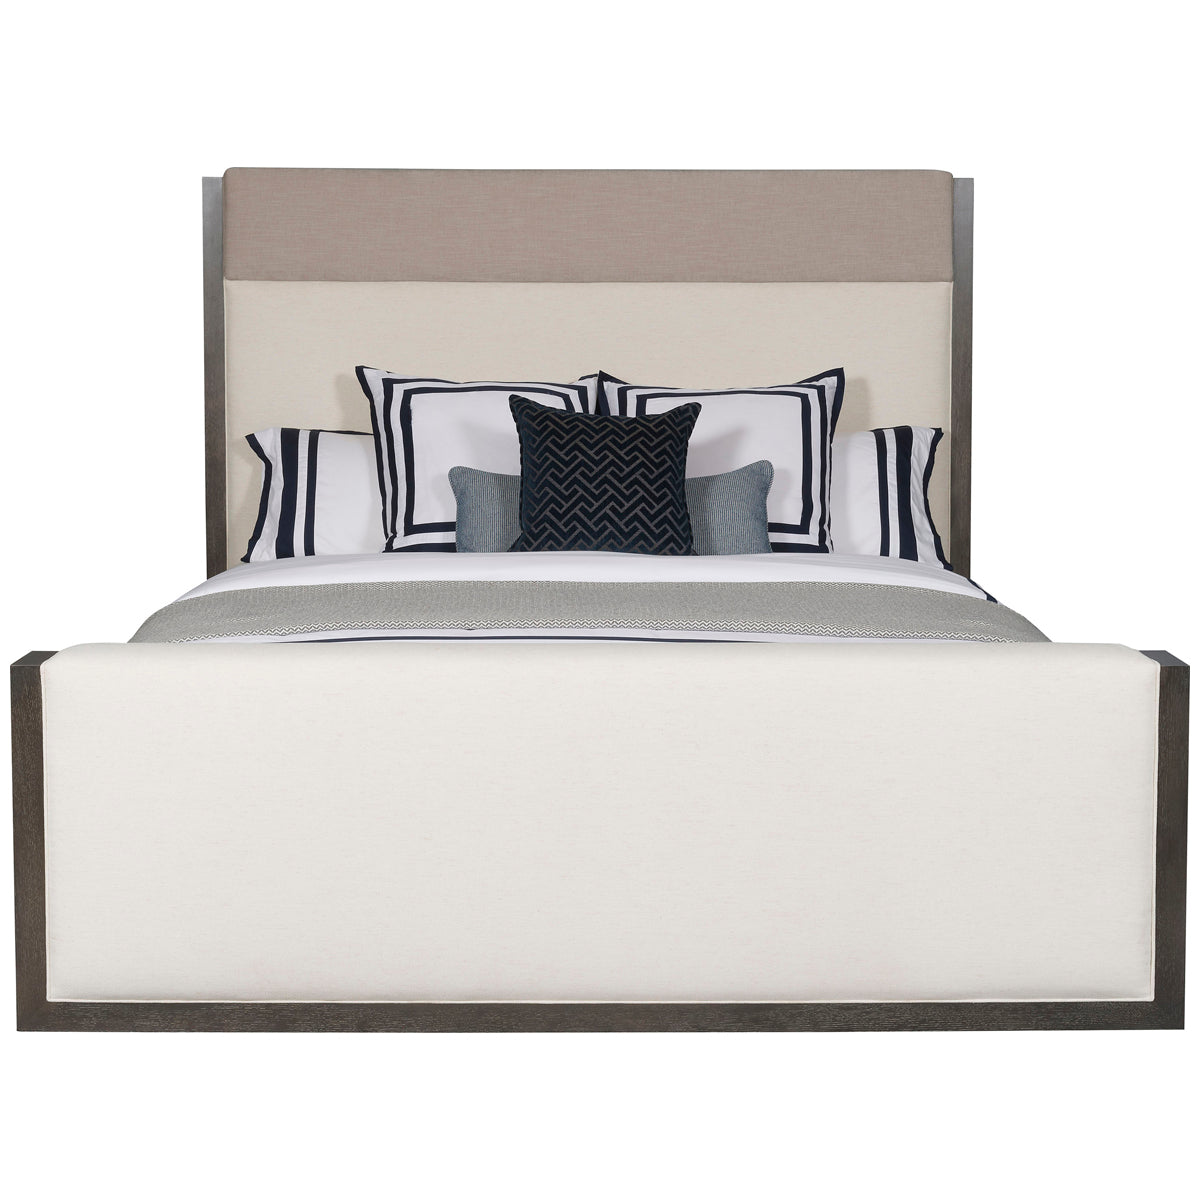 Vanguard Furniture Howell Bed